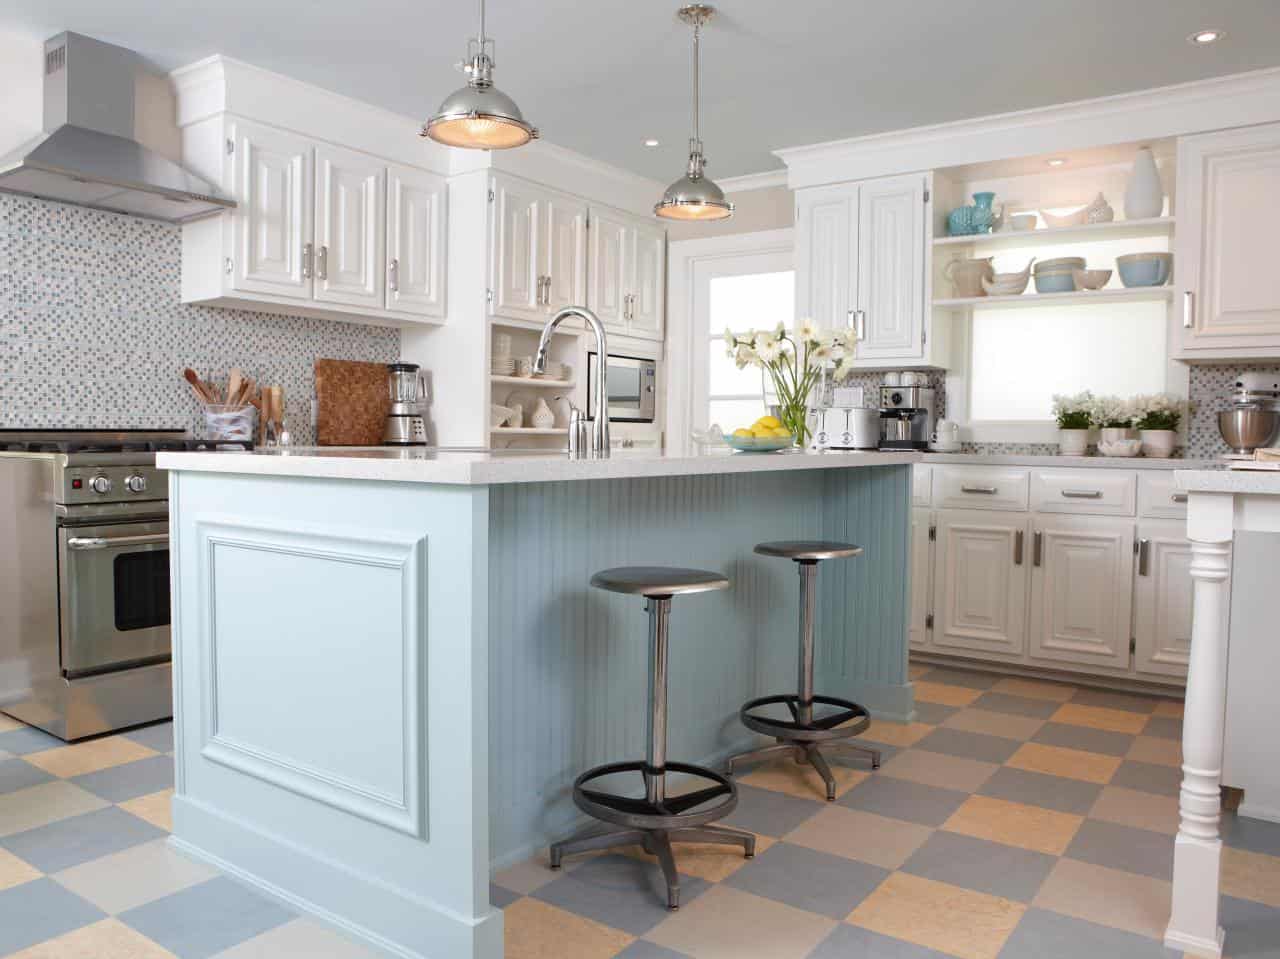 white and blue kitchen